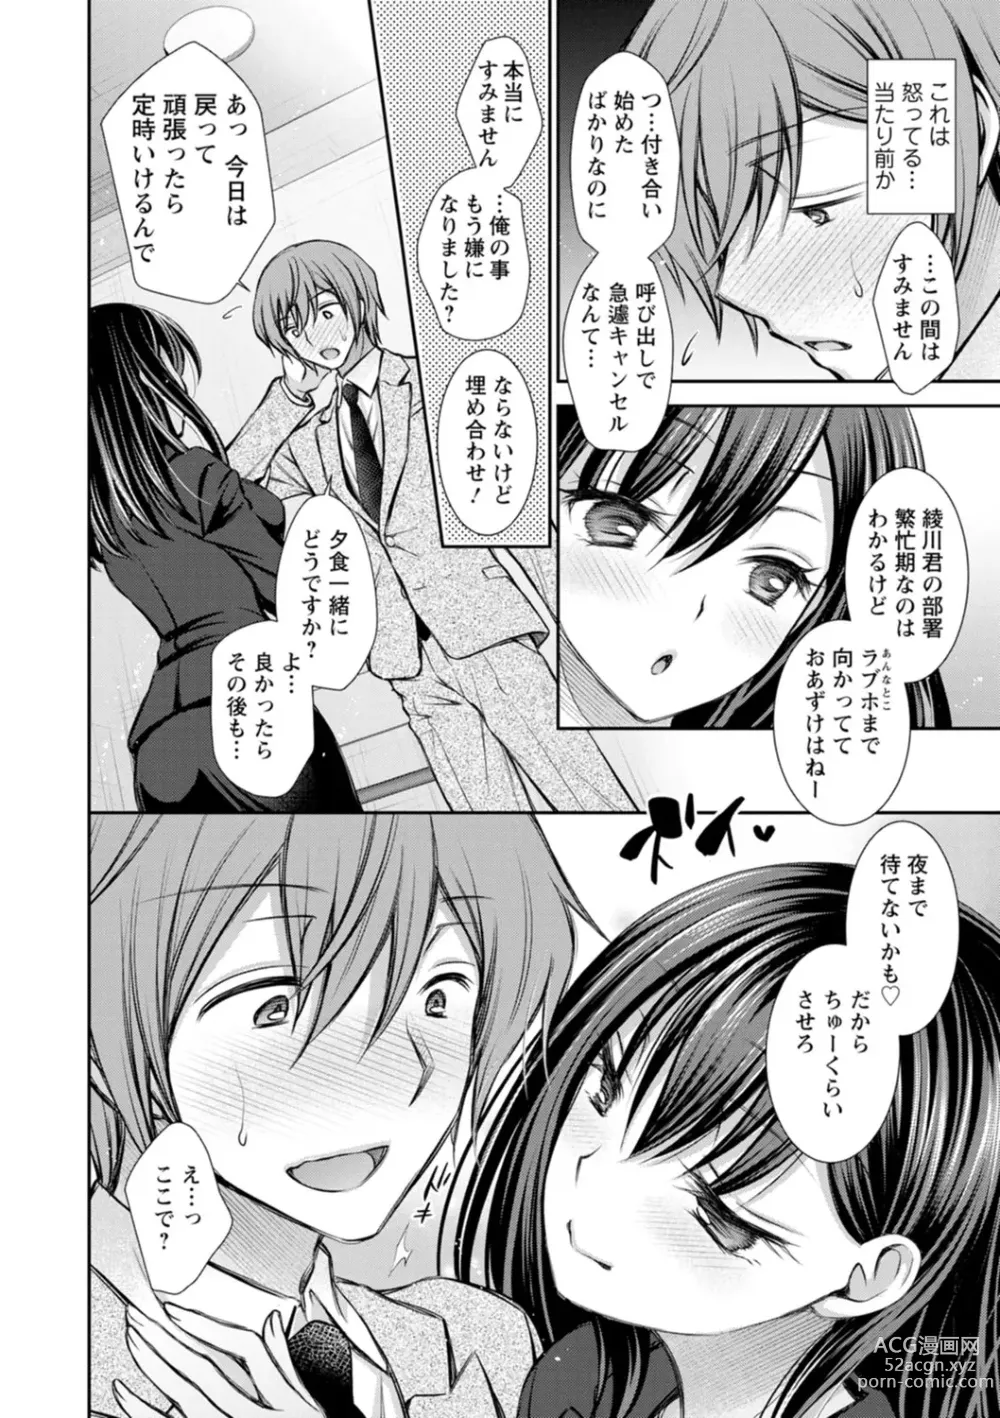 Page 8 of manga Furete Mitakute.